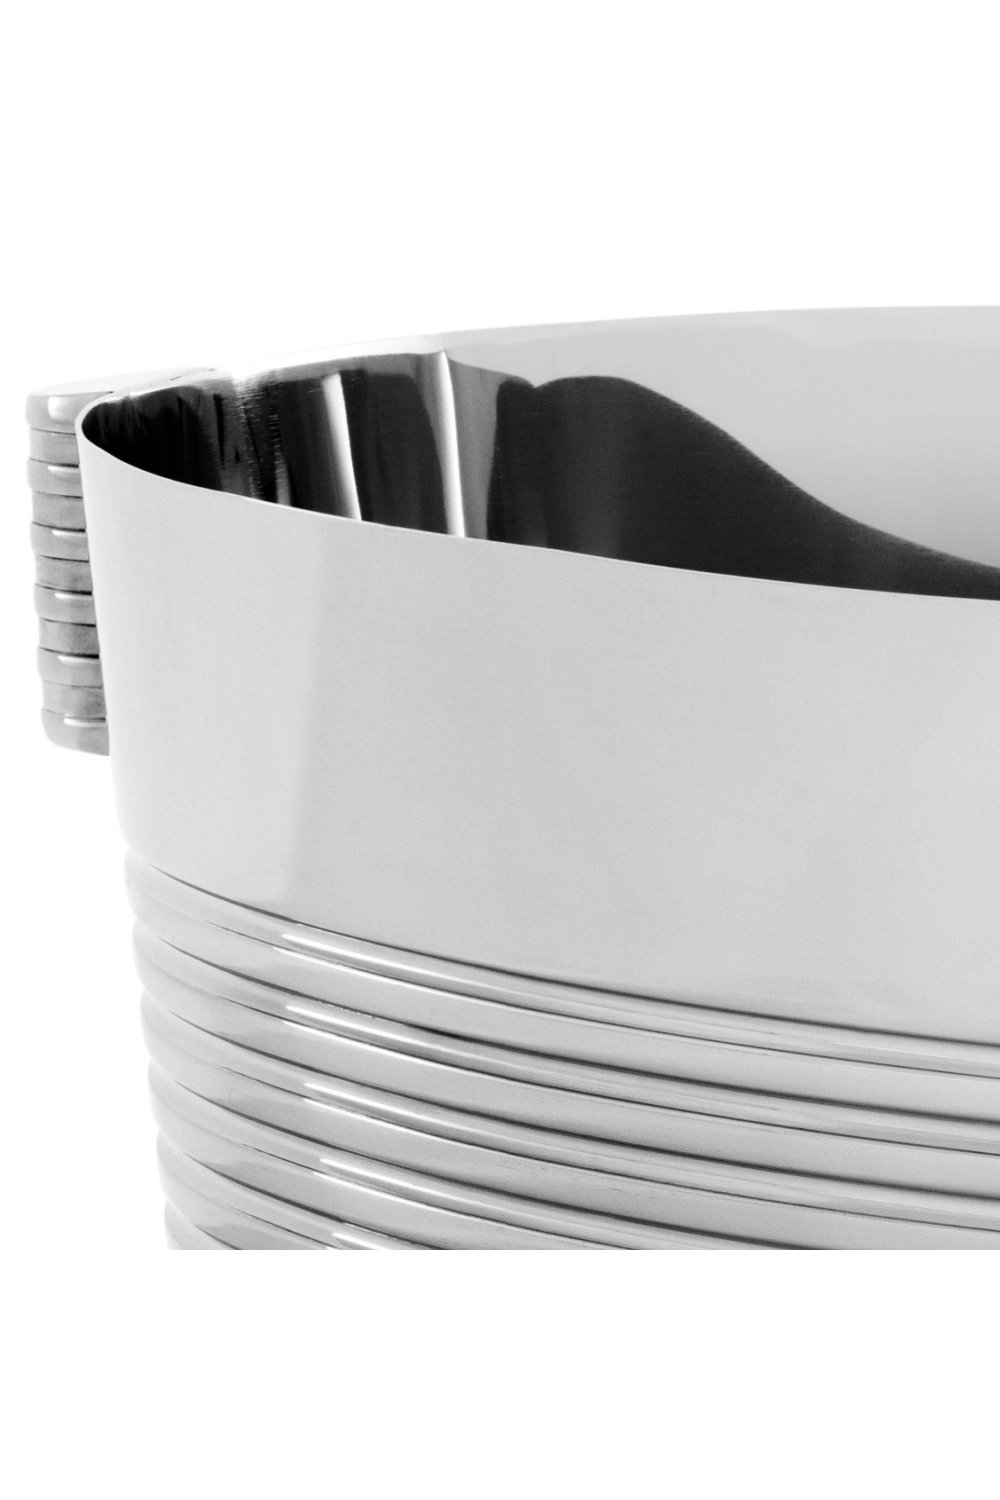 Silver Champagne Bucket | Eichholtz Biarritz | OROA Modern Furniture